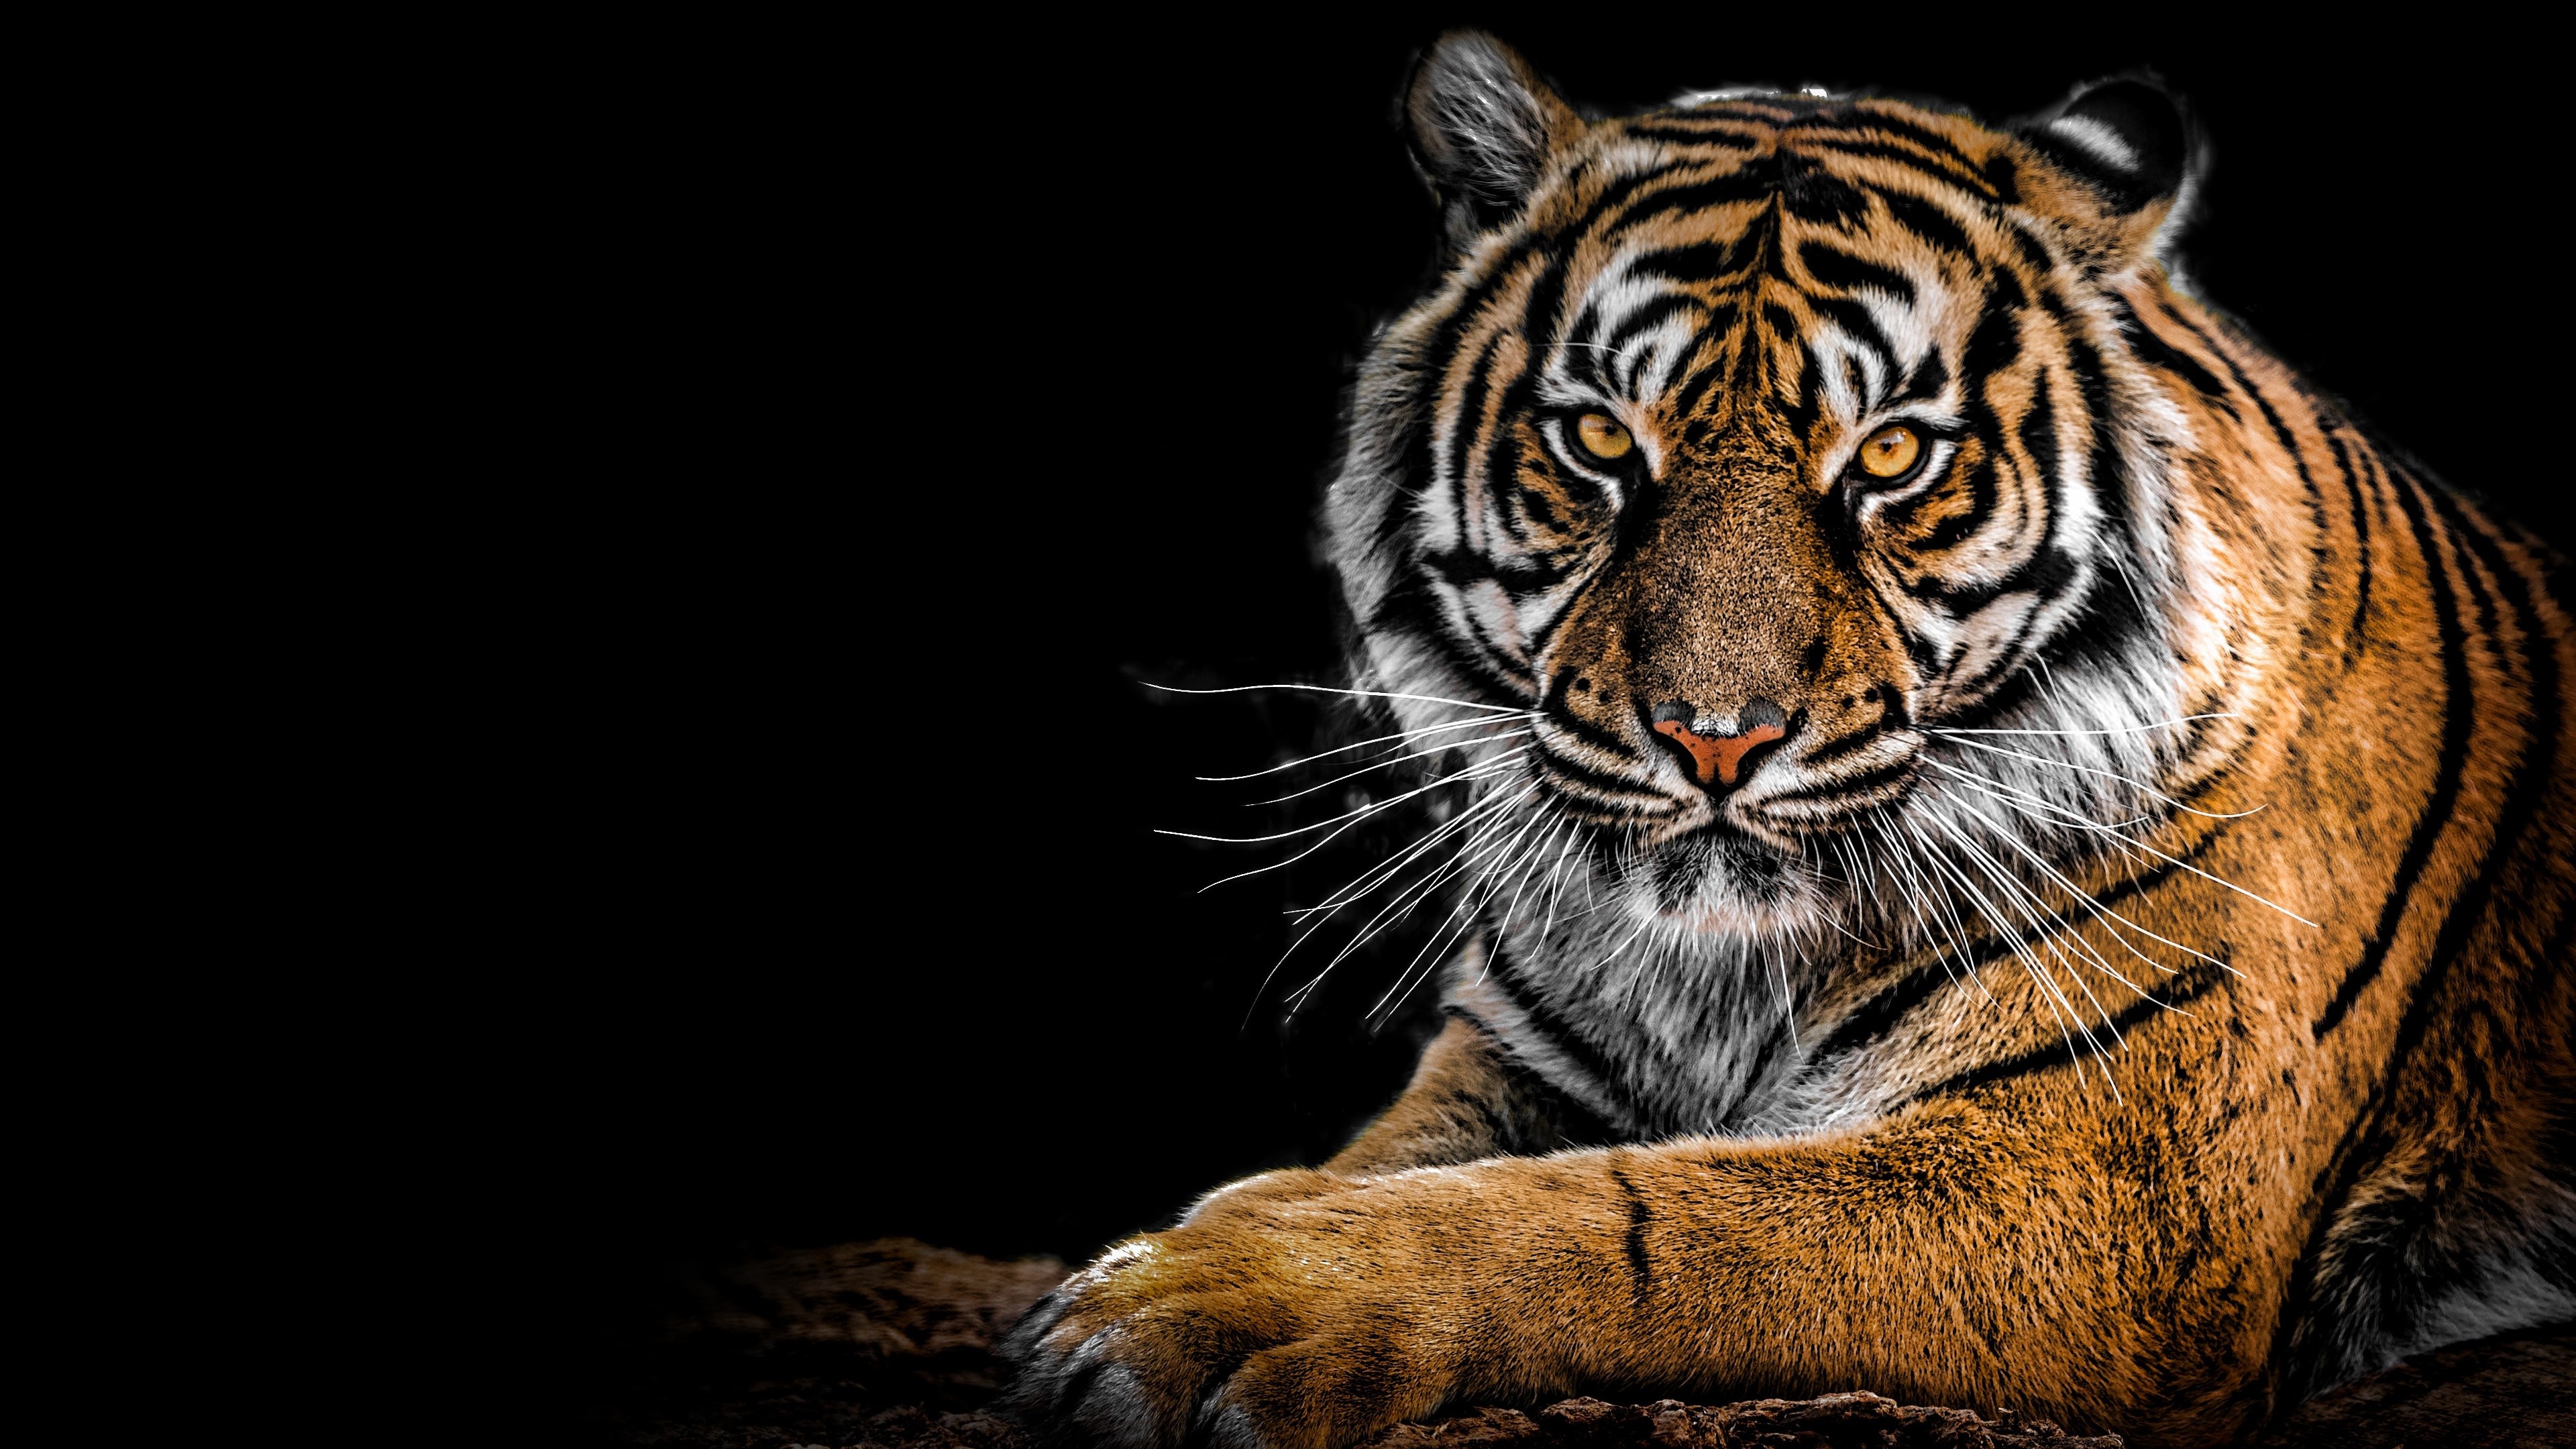 Siberian Tiger 4k Ultra HD Wallpapers